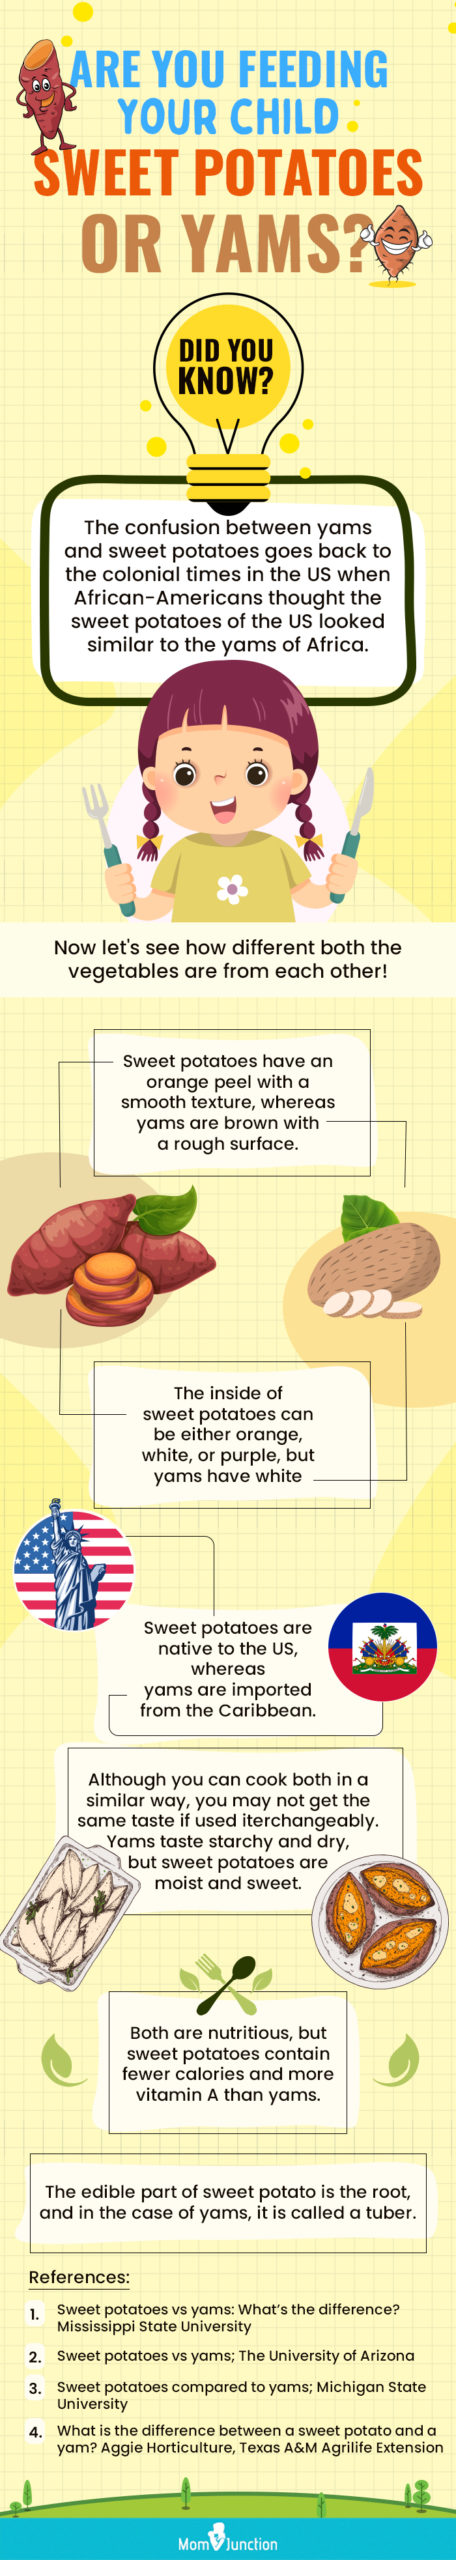 10 Healthy And Kid-Friendly Sweet Potato Recipes